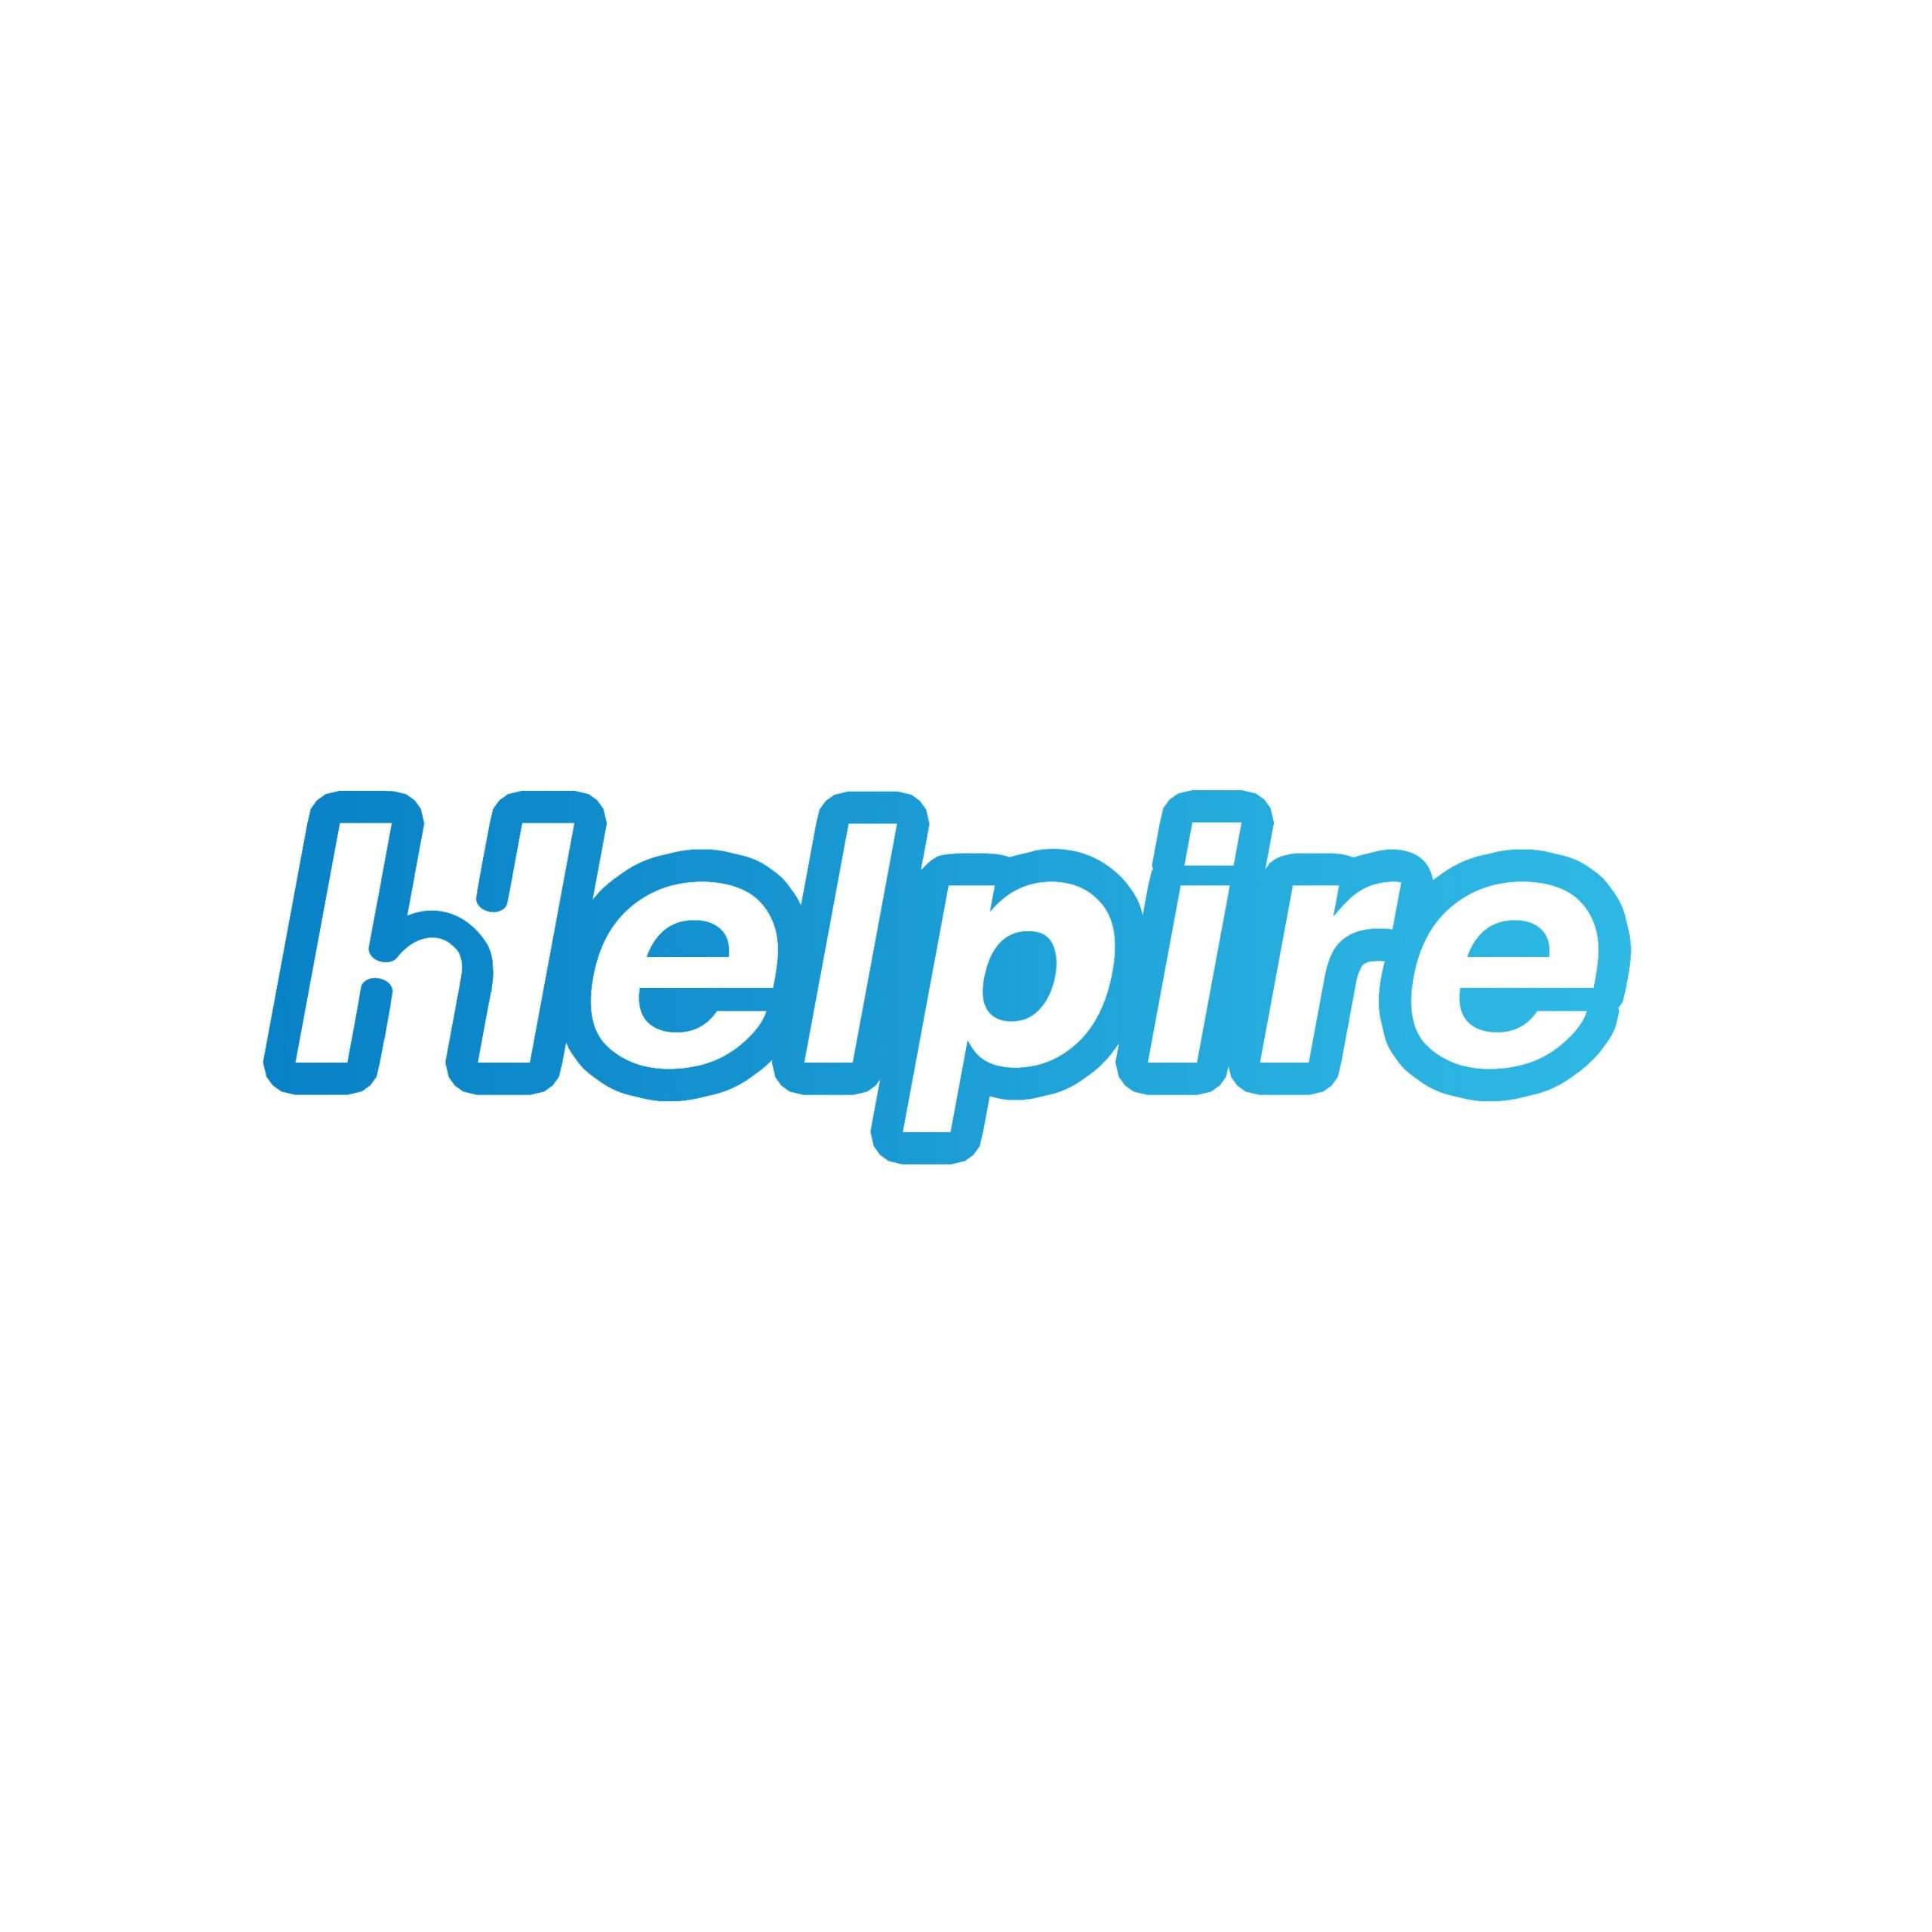 Helpire Logo 2 FINAL 2